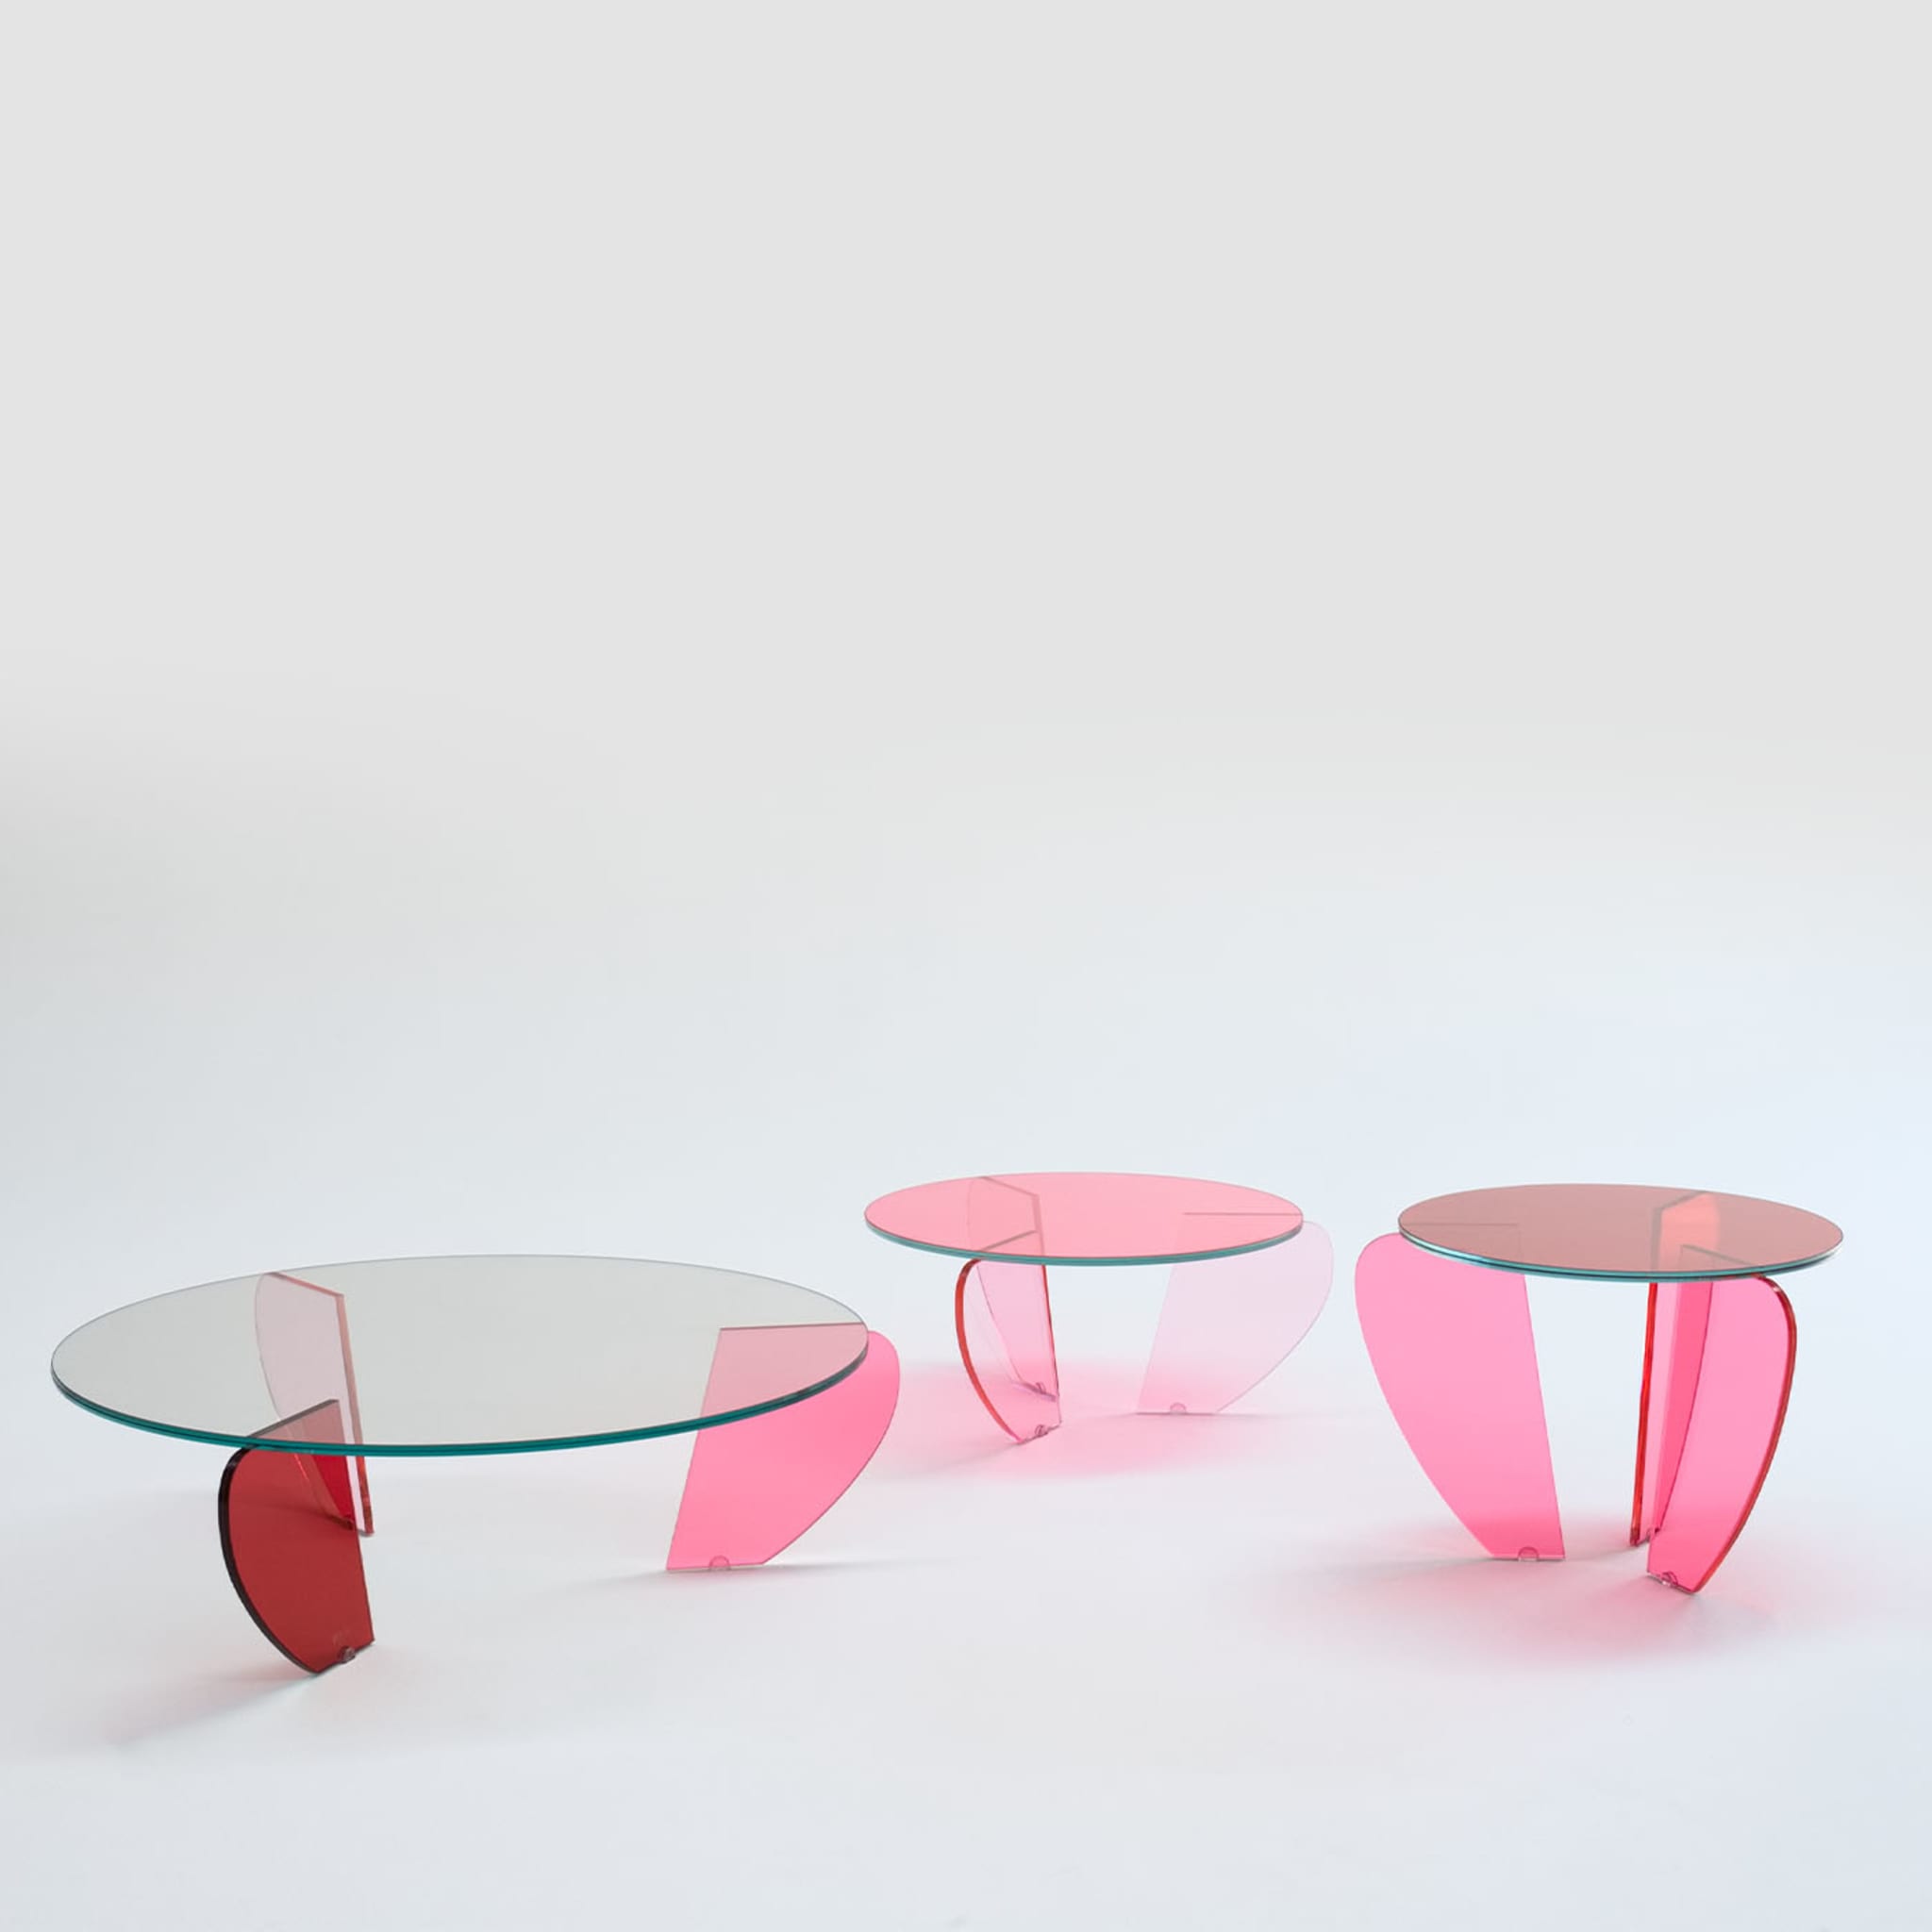 Teo Grande table basse colorée par Andrea Petterini - Vue alternative 4